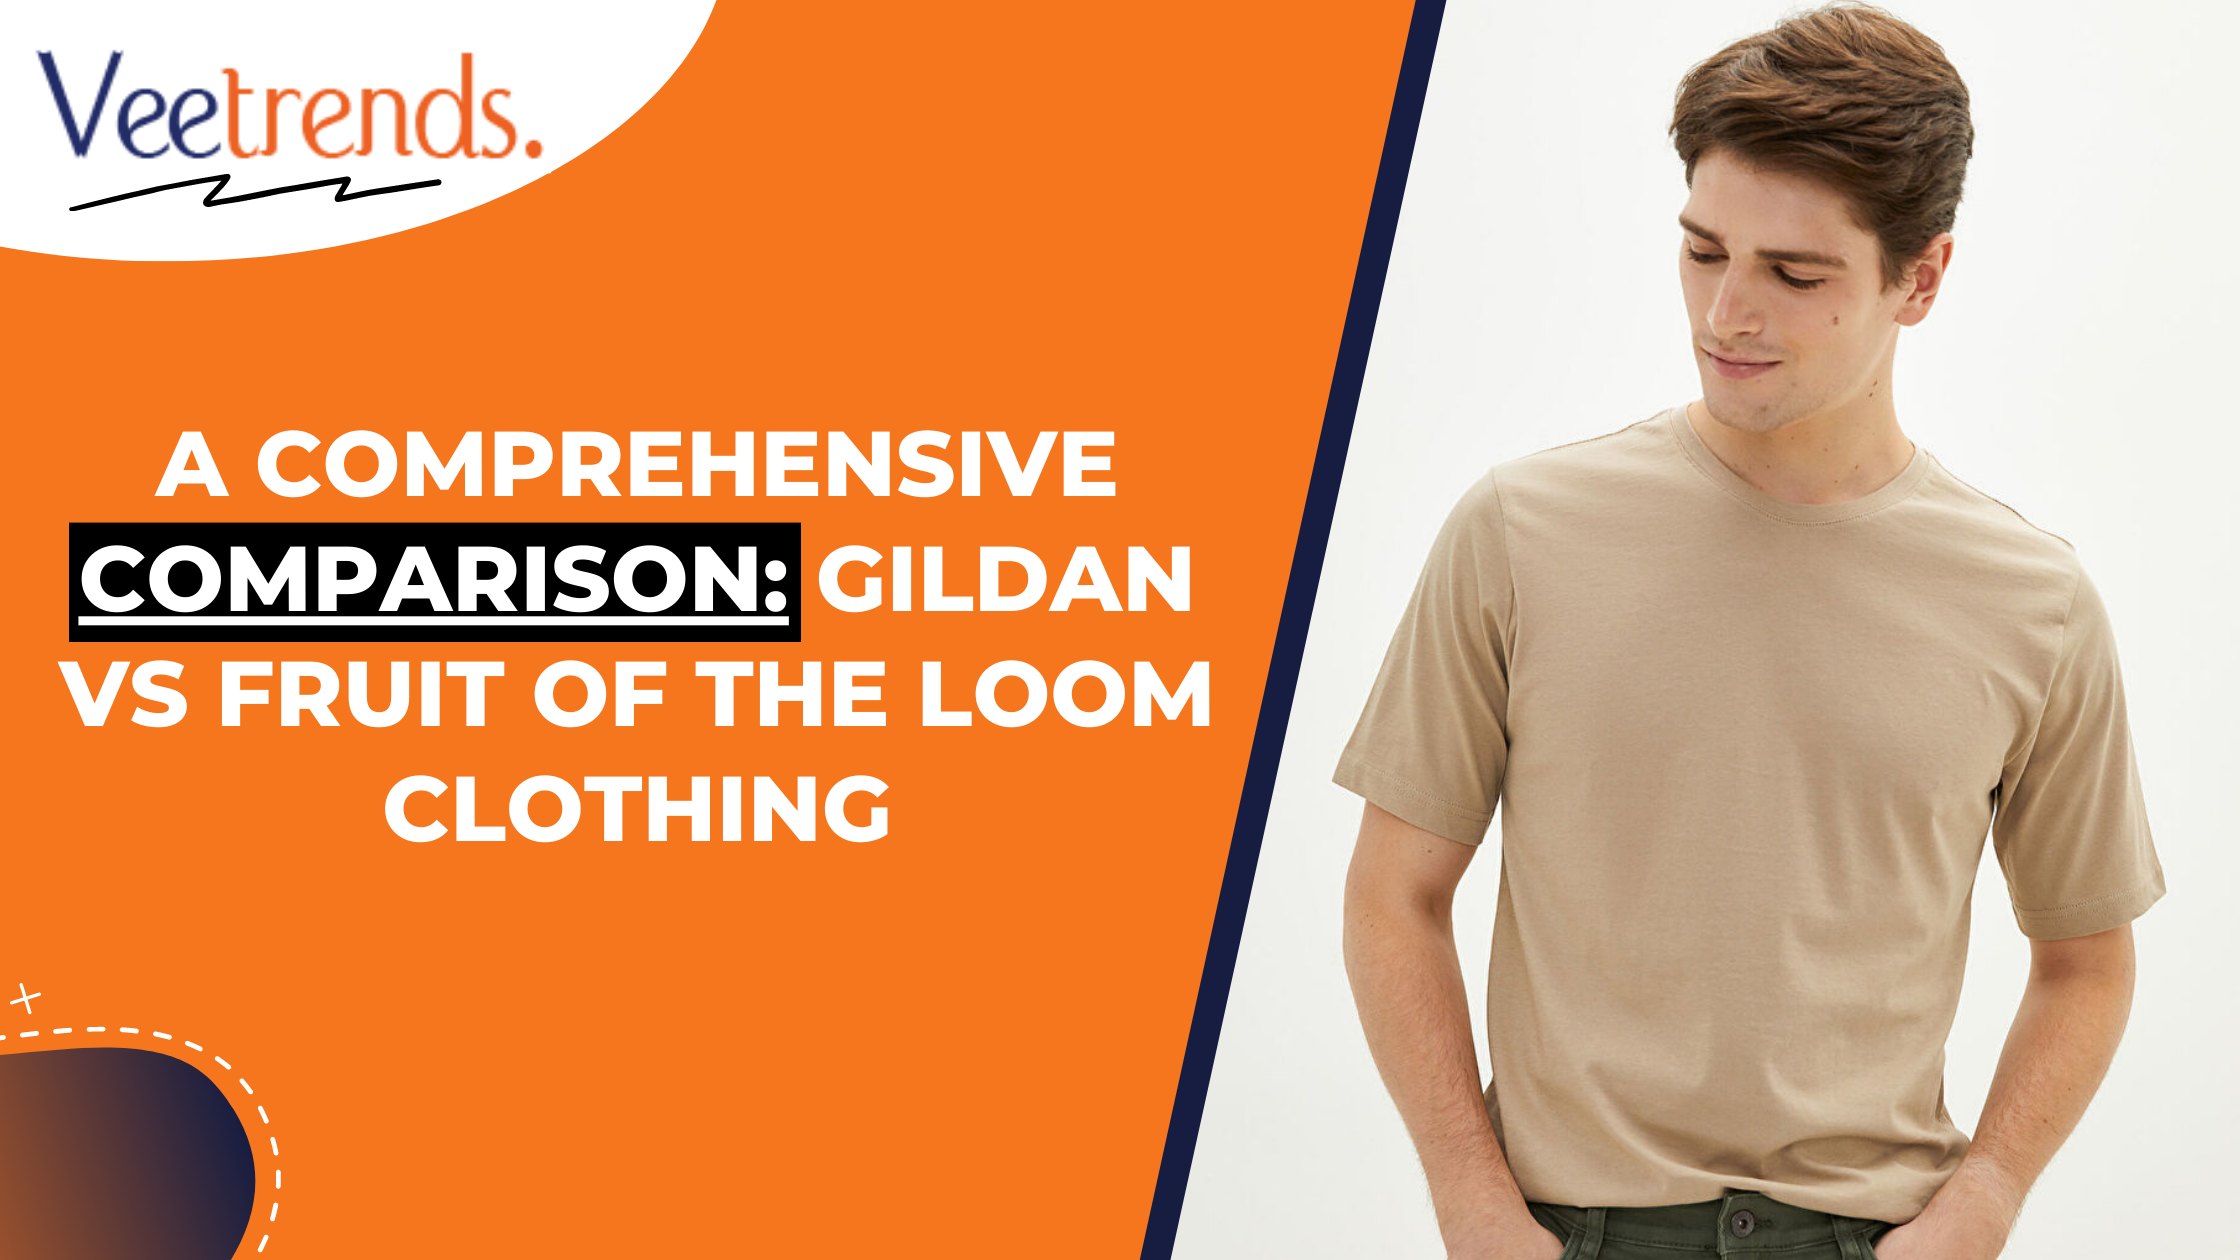 A Comprehensive Comparison: Gildan VS Fruit of the Loom Clothing